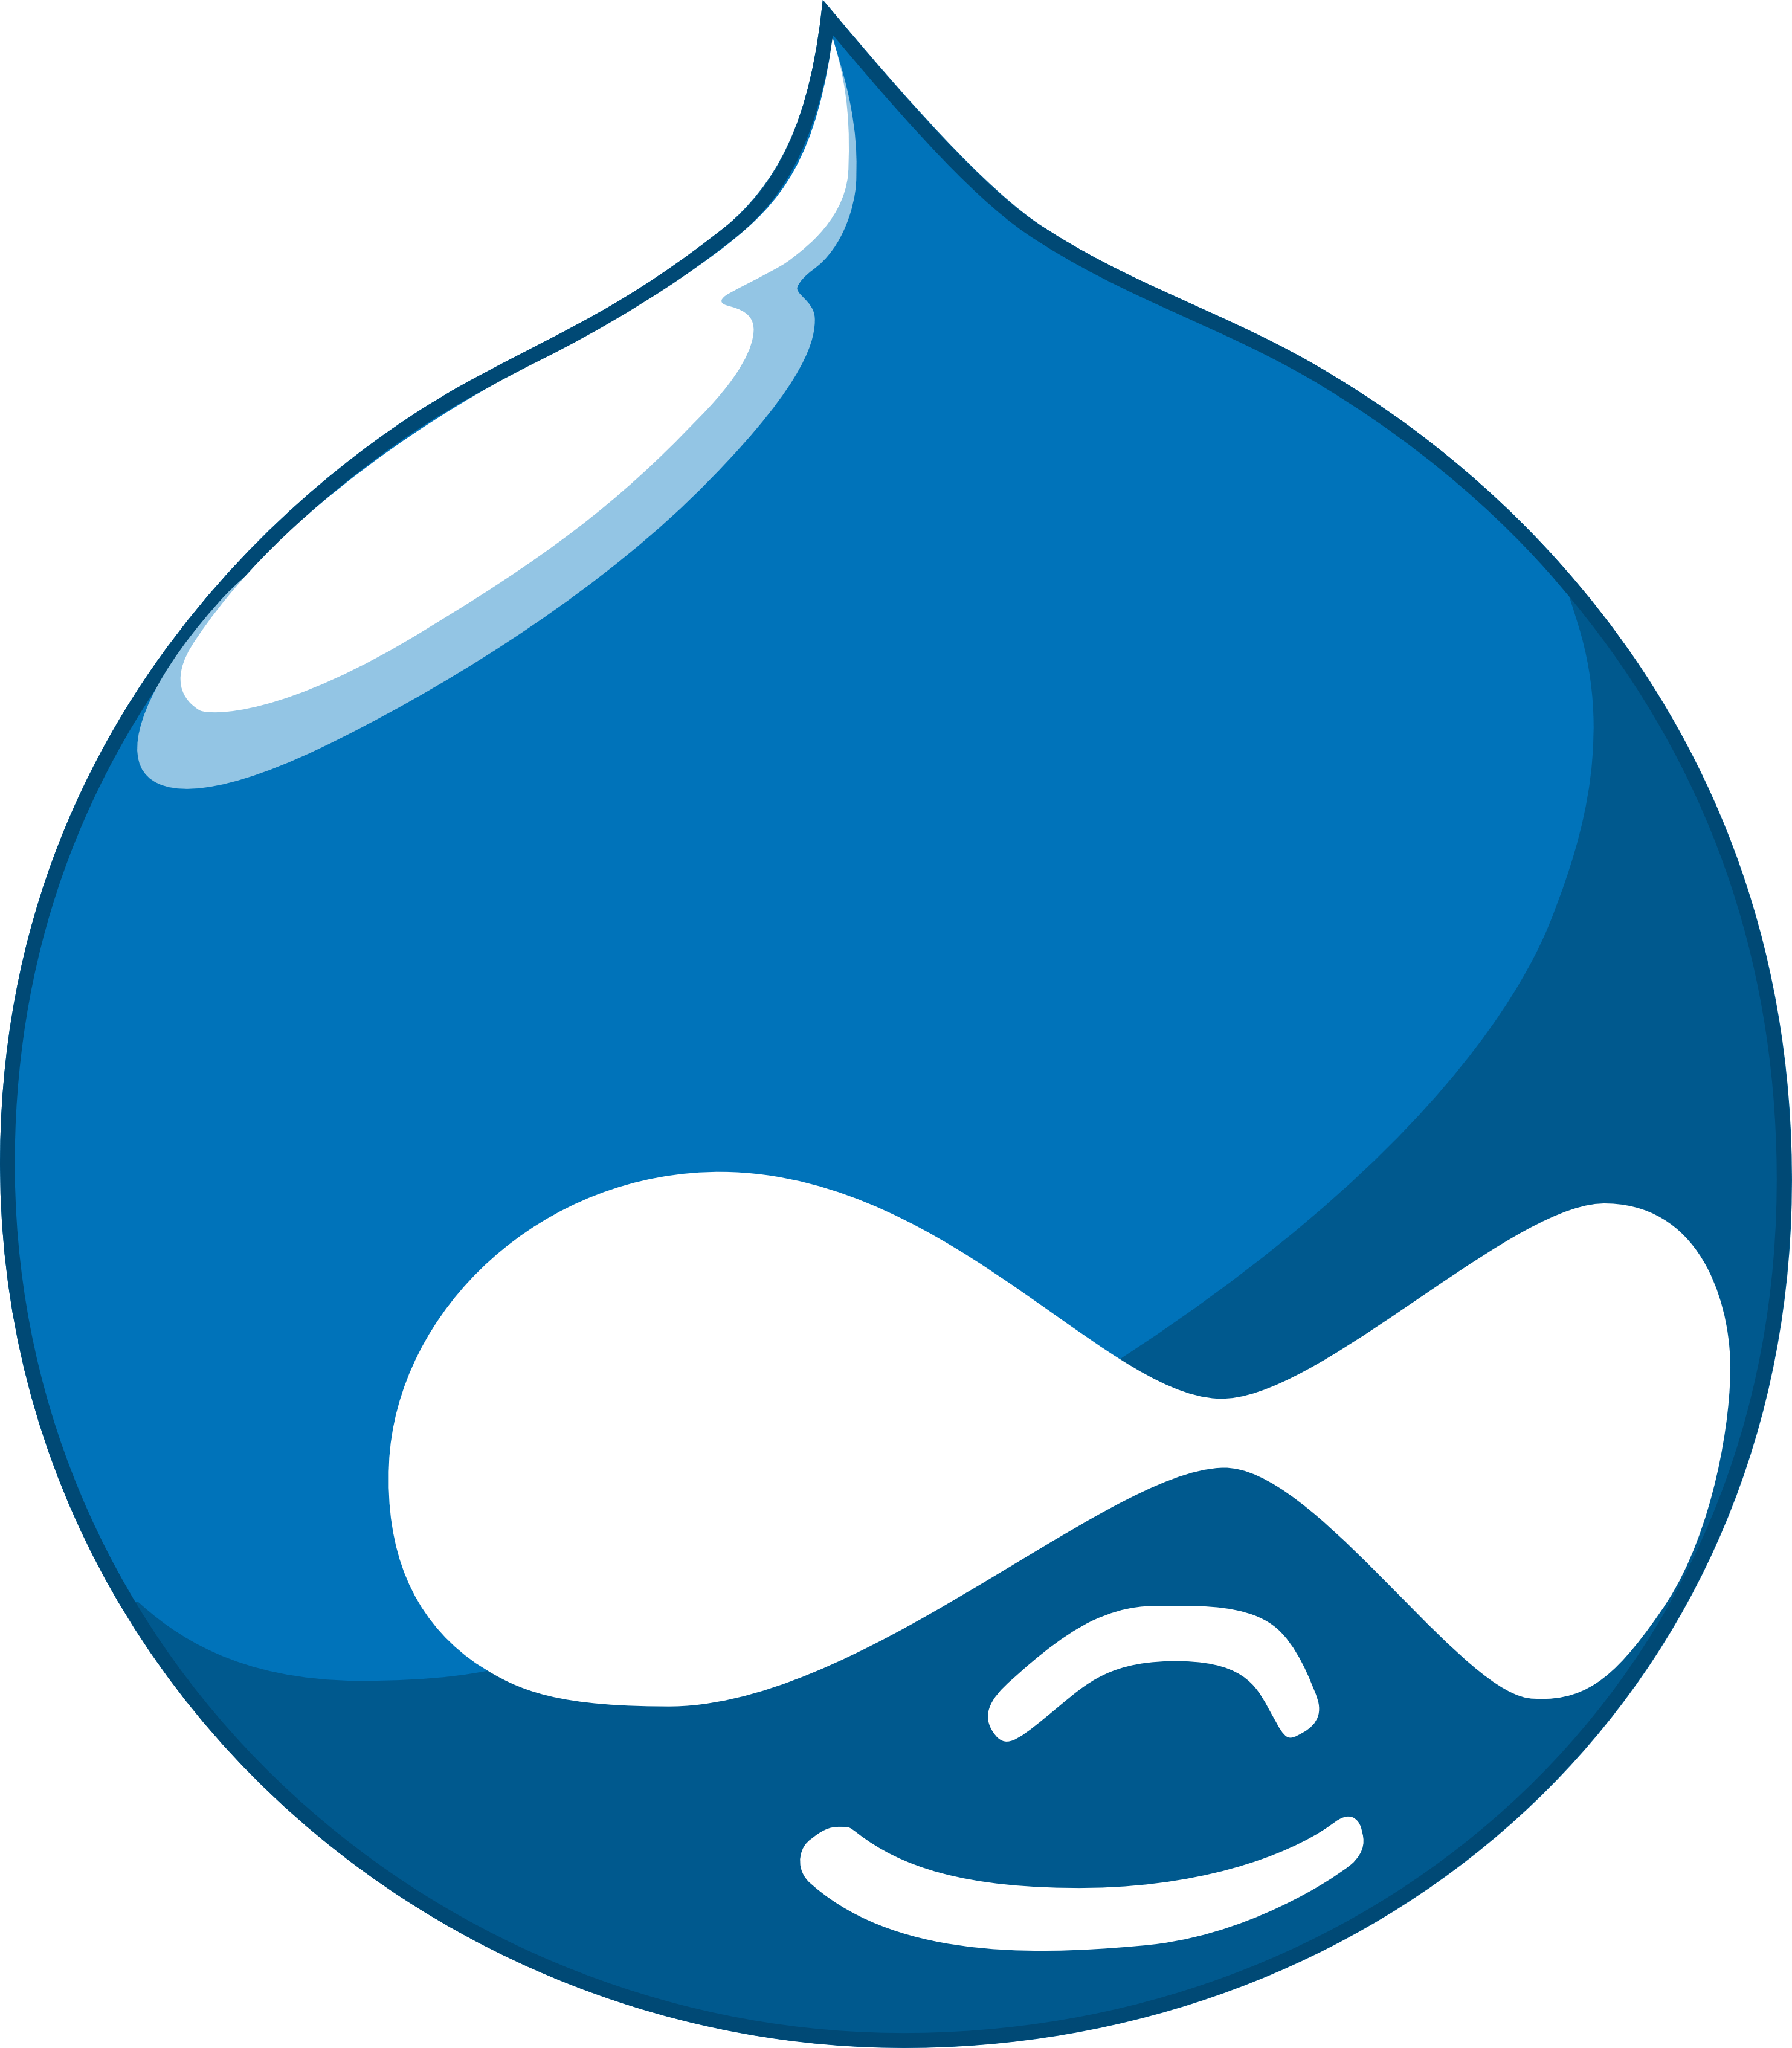 Blue Water Drop Logo - Drupal vs WordPress: Which to use?